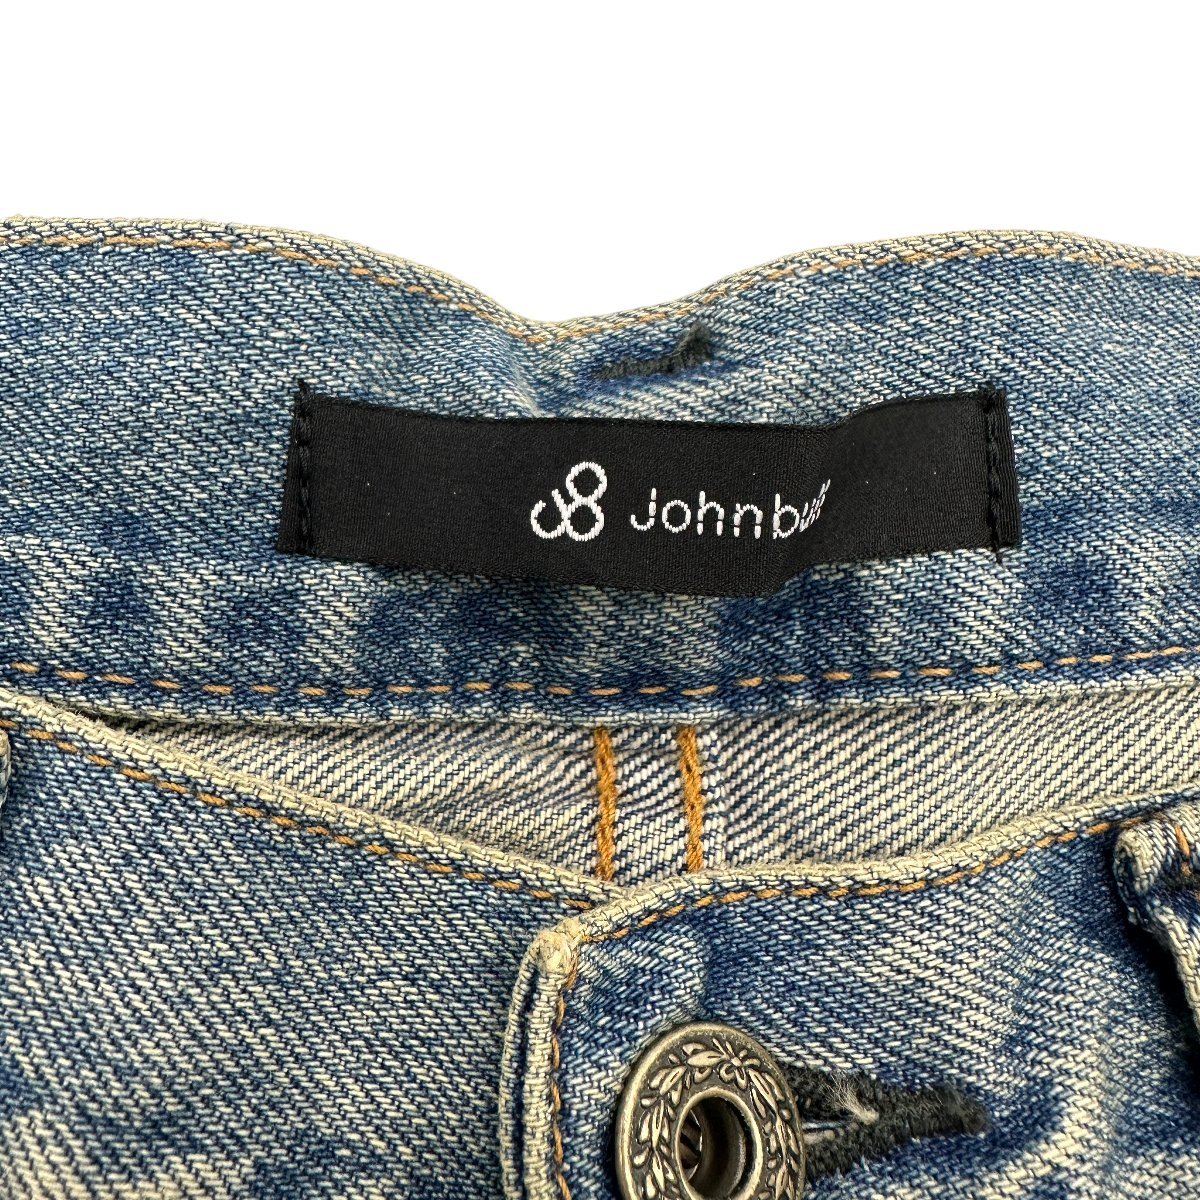 A929# beautiful goods #Johnbull Johnbull # authentic tight strut jeans 11815#30 size men's bottoms Denim 